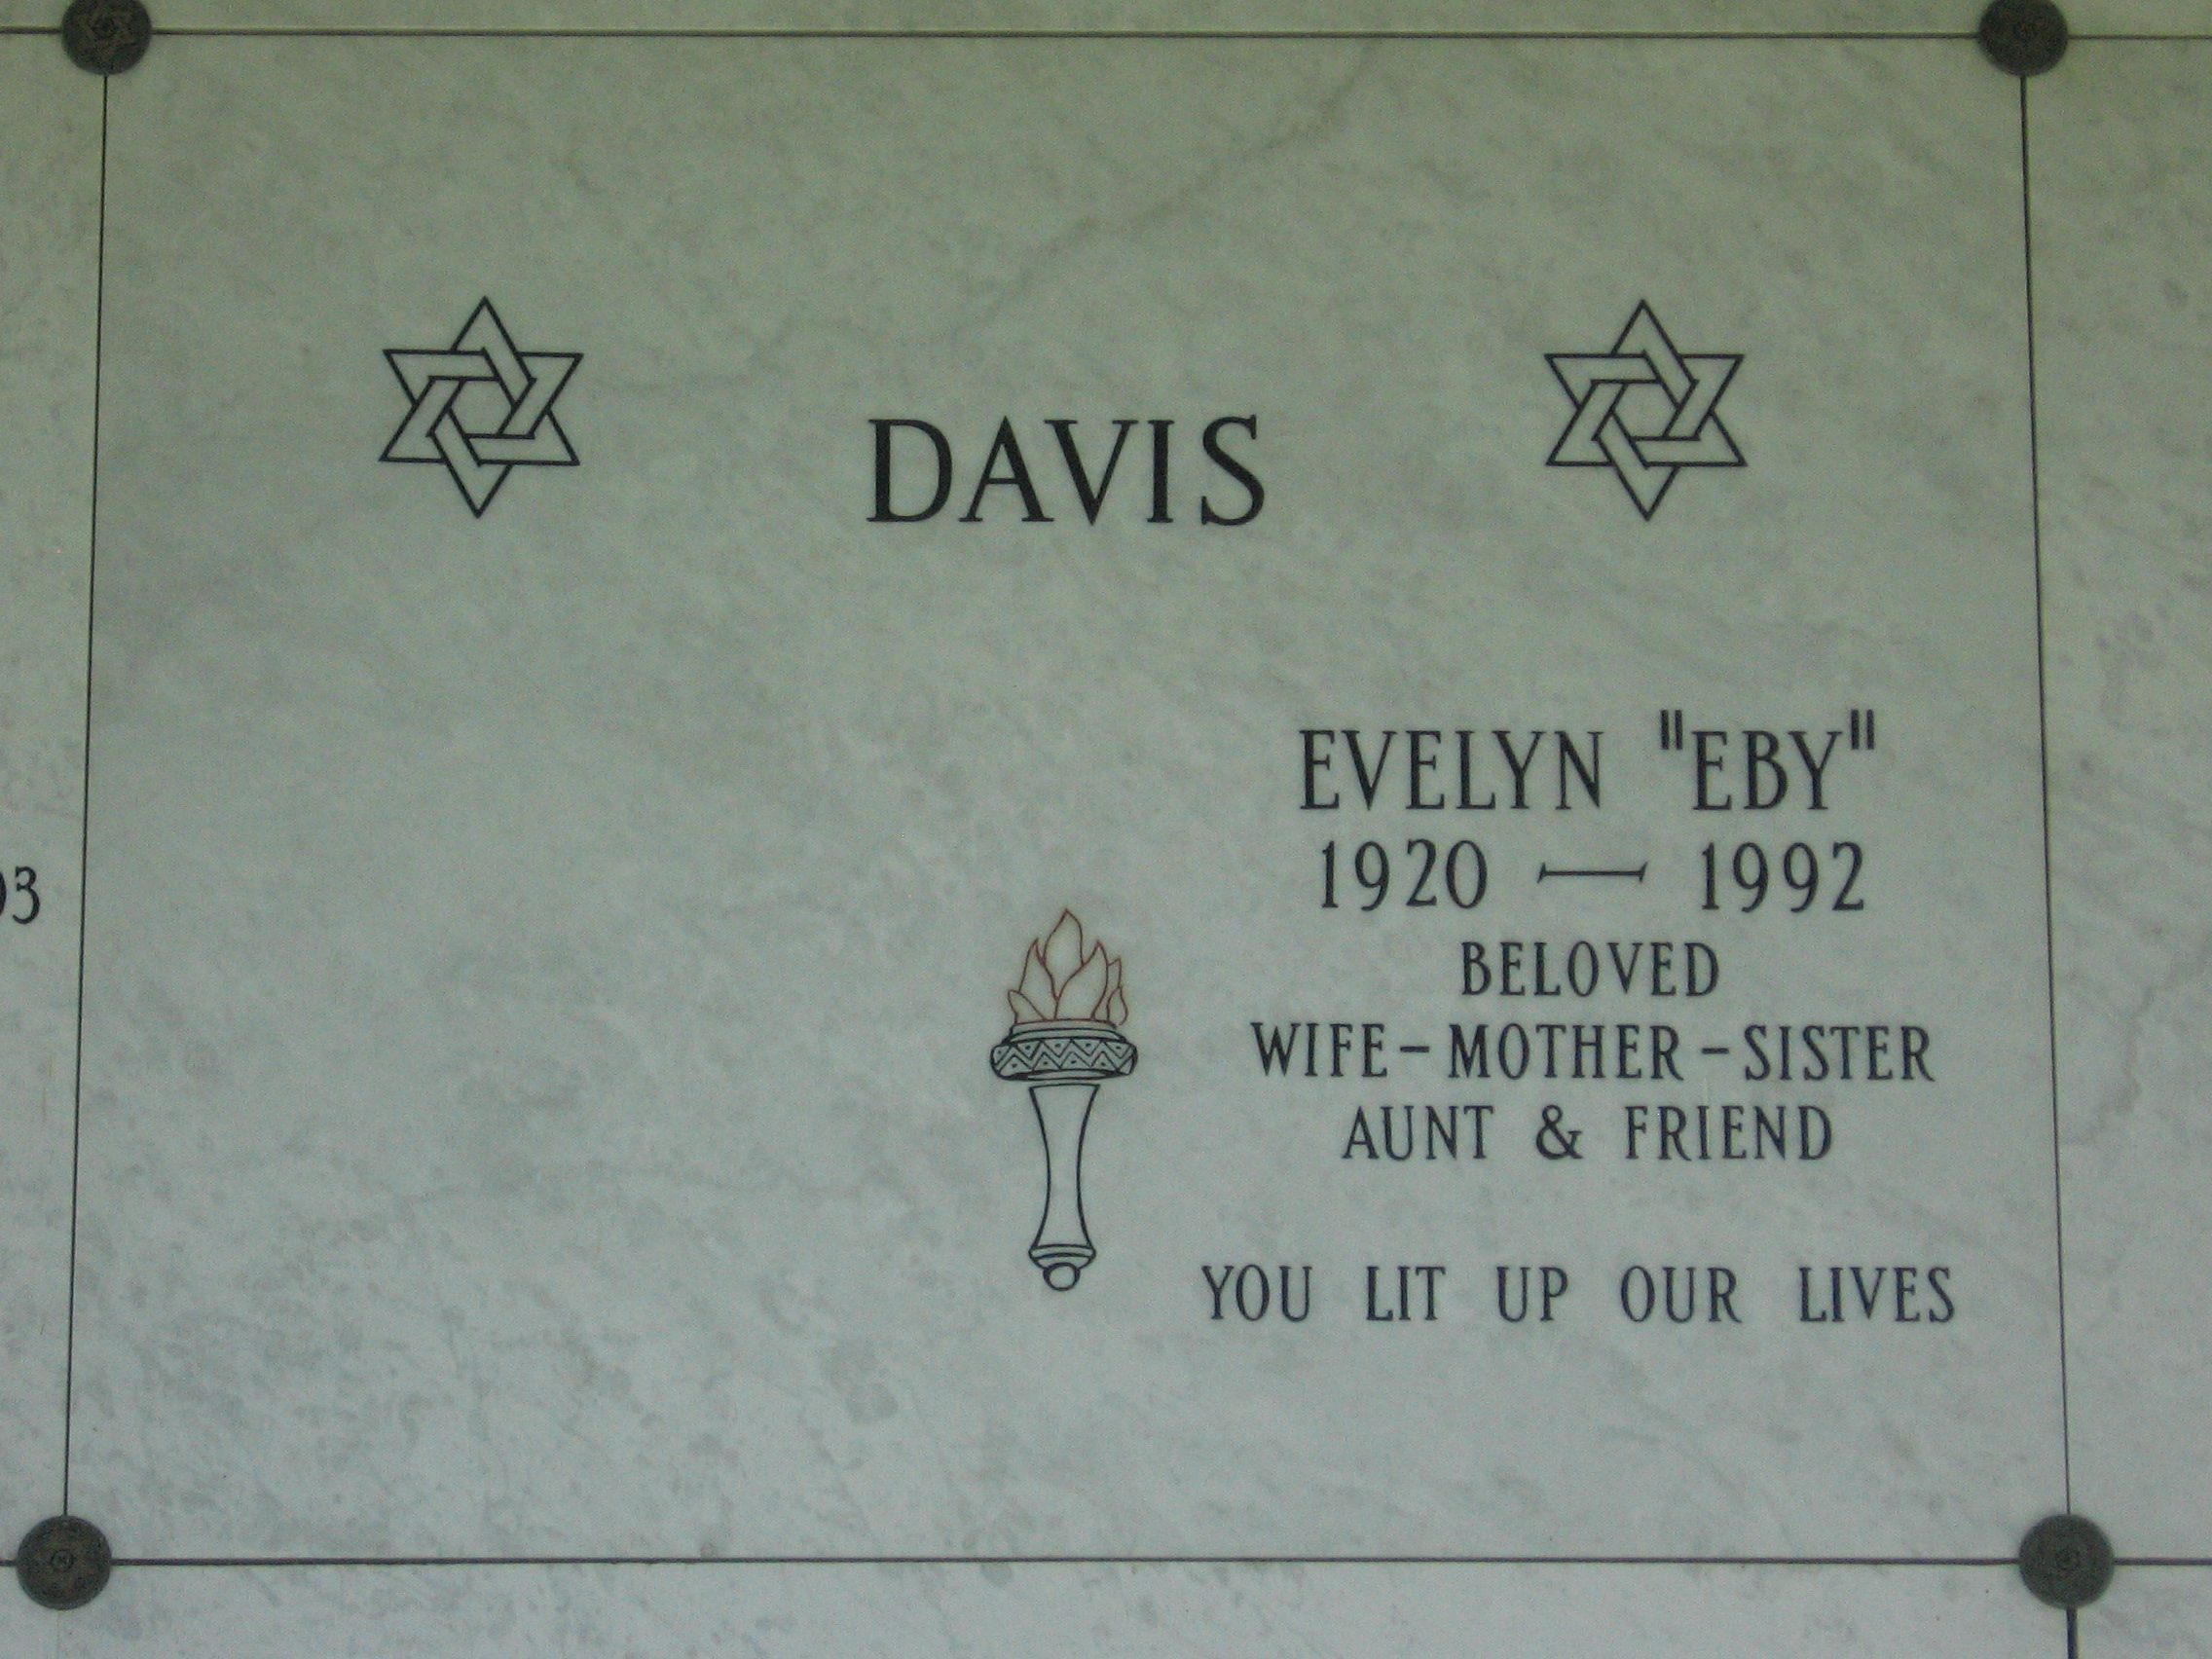 Evelyn "Eby" Davis